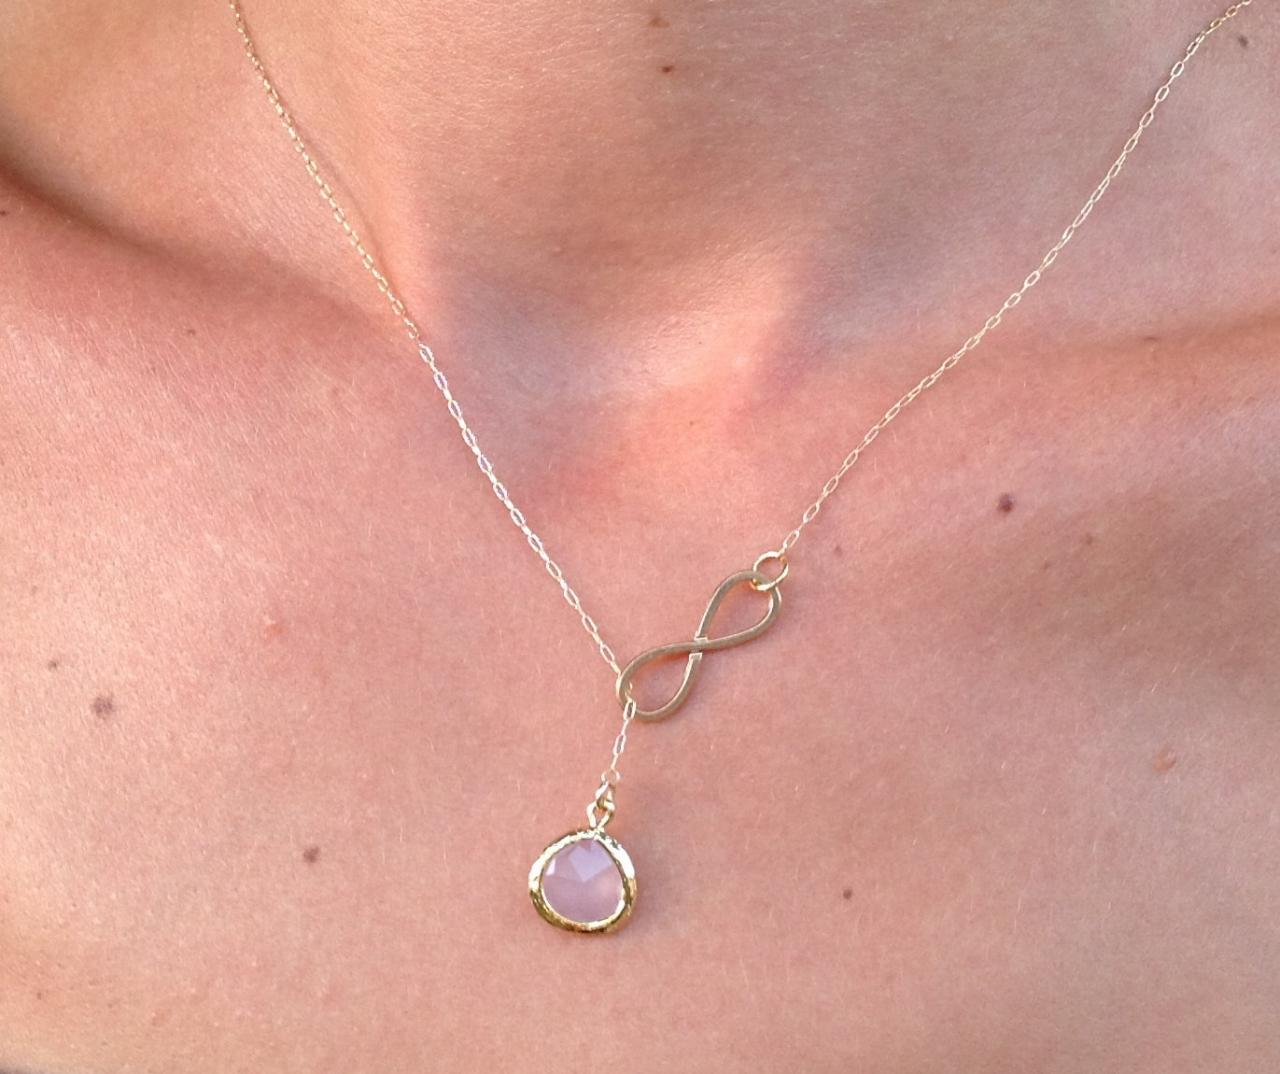 Gold Neckalce, Lariat Necklace, Infinity Gold Necklace, Delicate Necklace, Infinity Necklace, Gold Circle Necklace 016